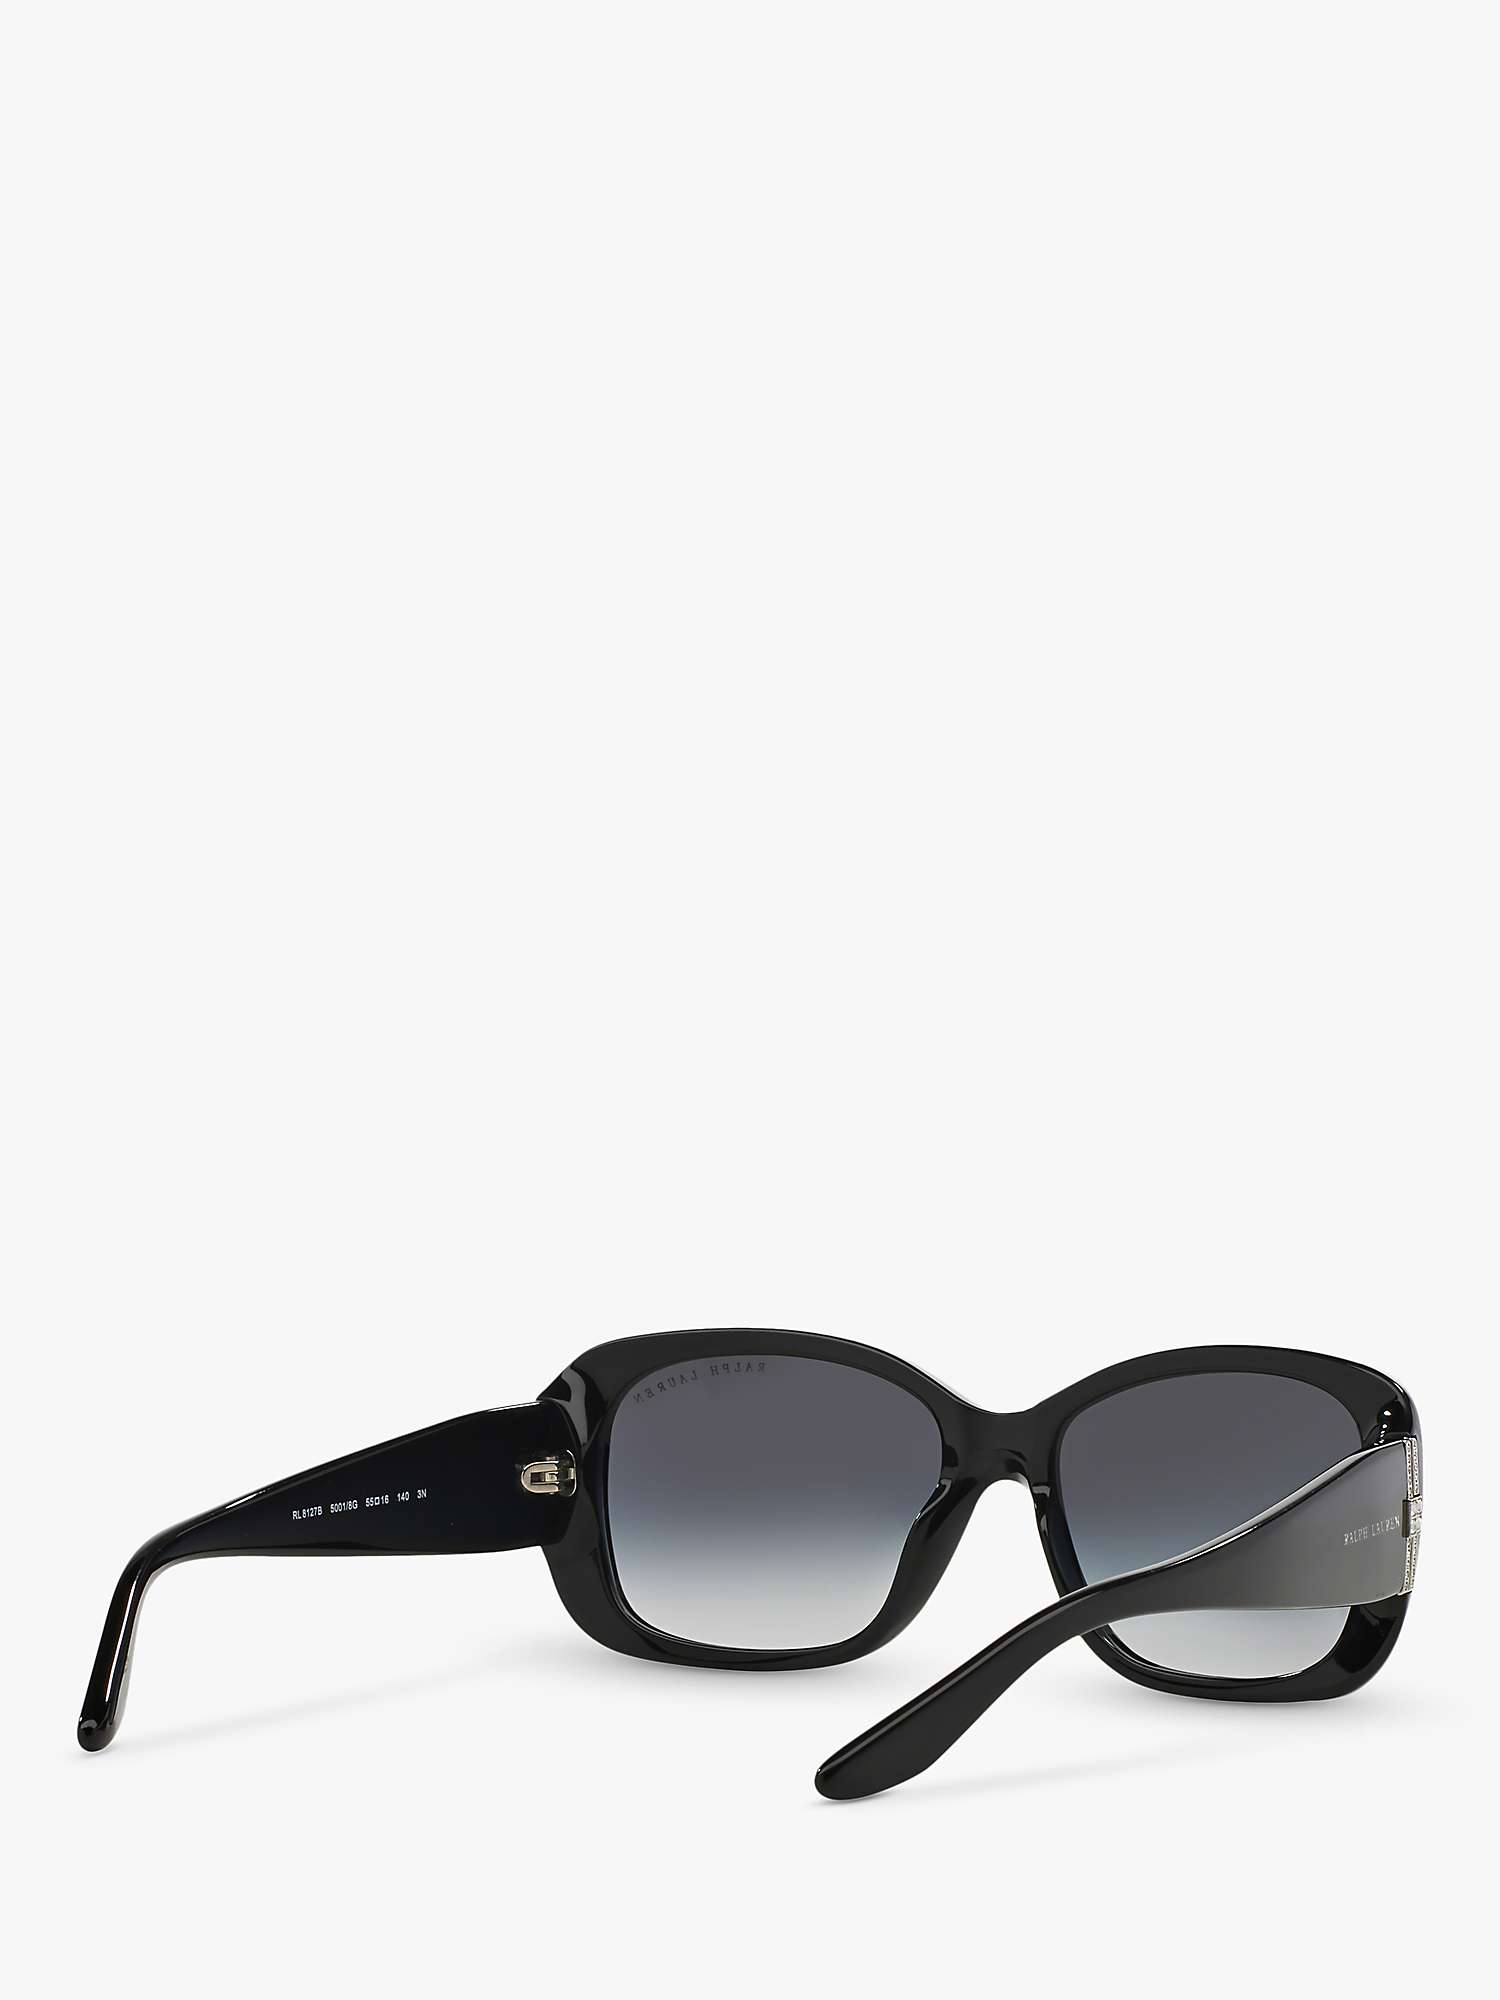 Buy Ralph Lauren RL8127B Women's Rectangular Sunglasses, Black/Grey Gradient Online at johnlewis.com